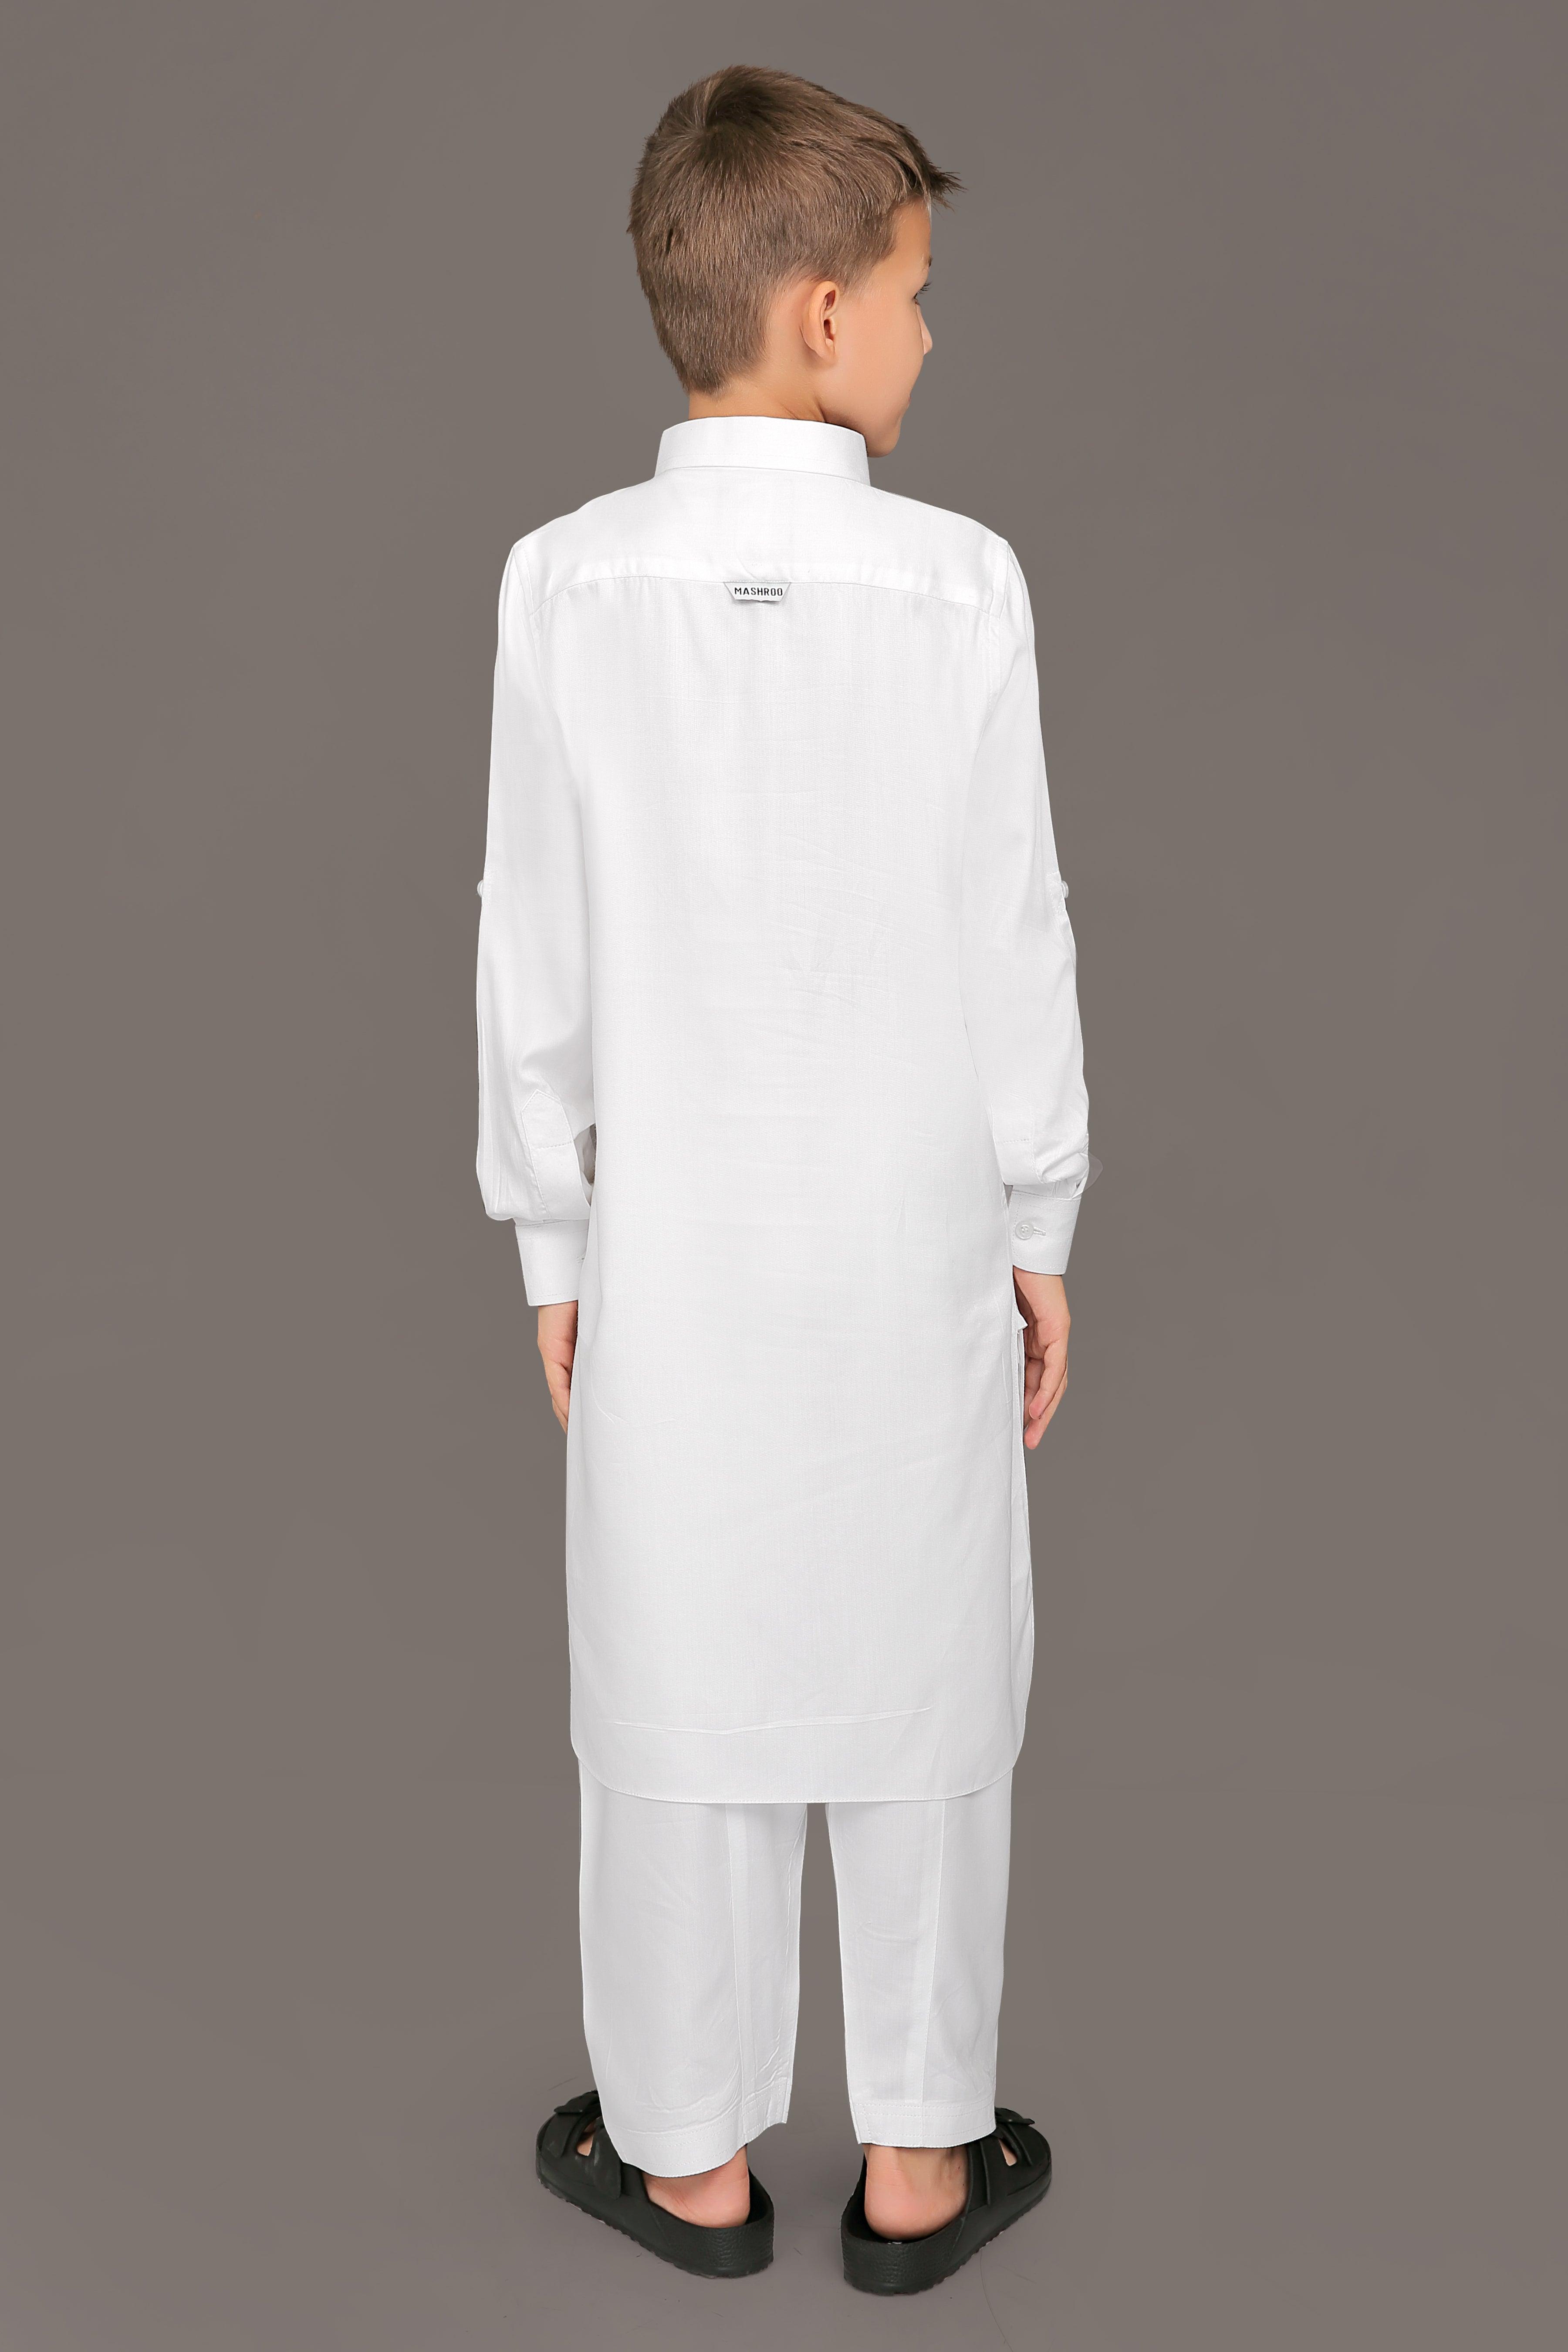 Oday White Pathani Suit for Kids - Mashroo